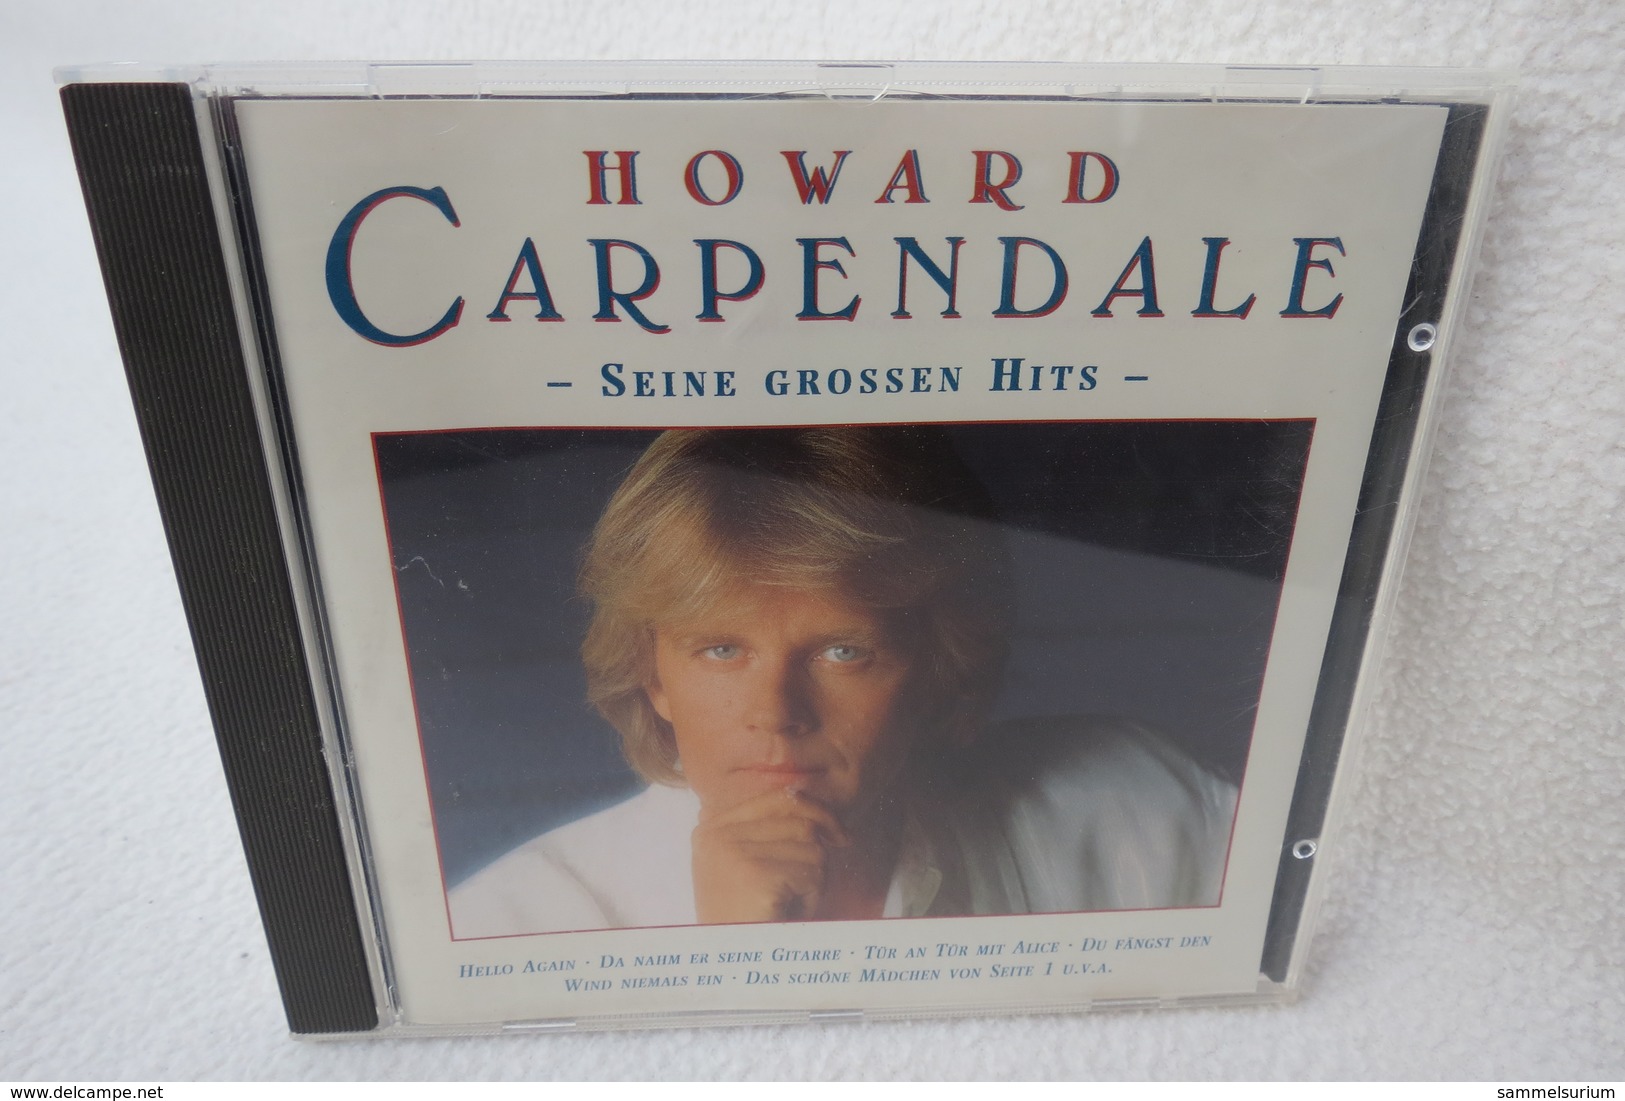 CD "Howard Carpendale" Seine Grossen Hits - Other - German Music